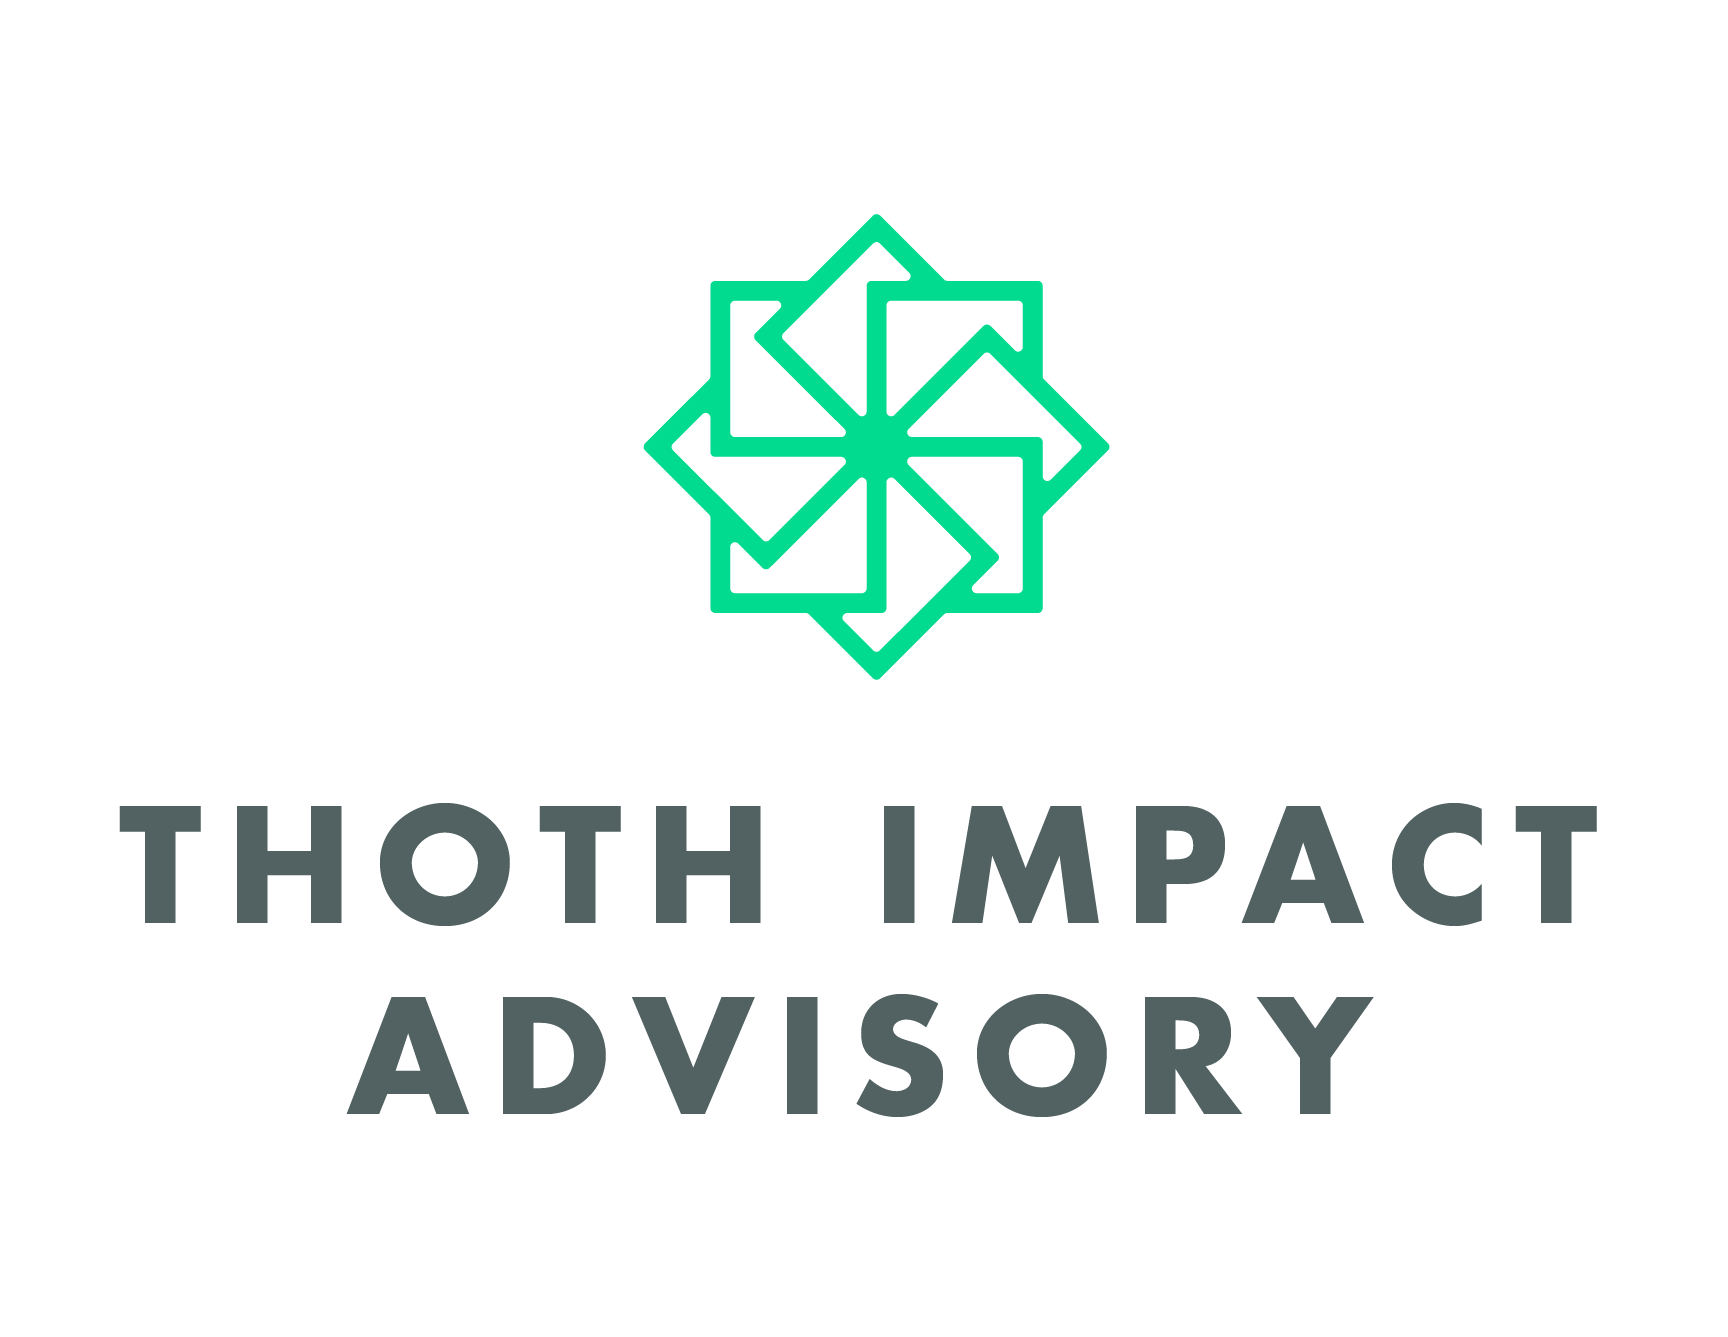 Thoth Impact Advisory